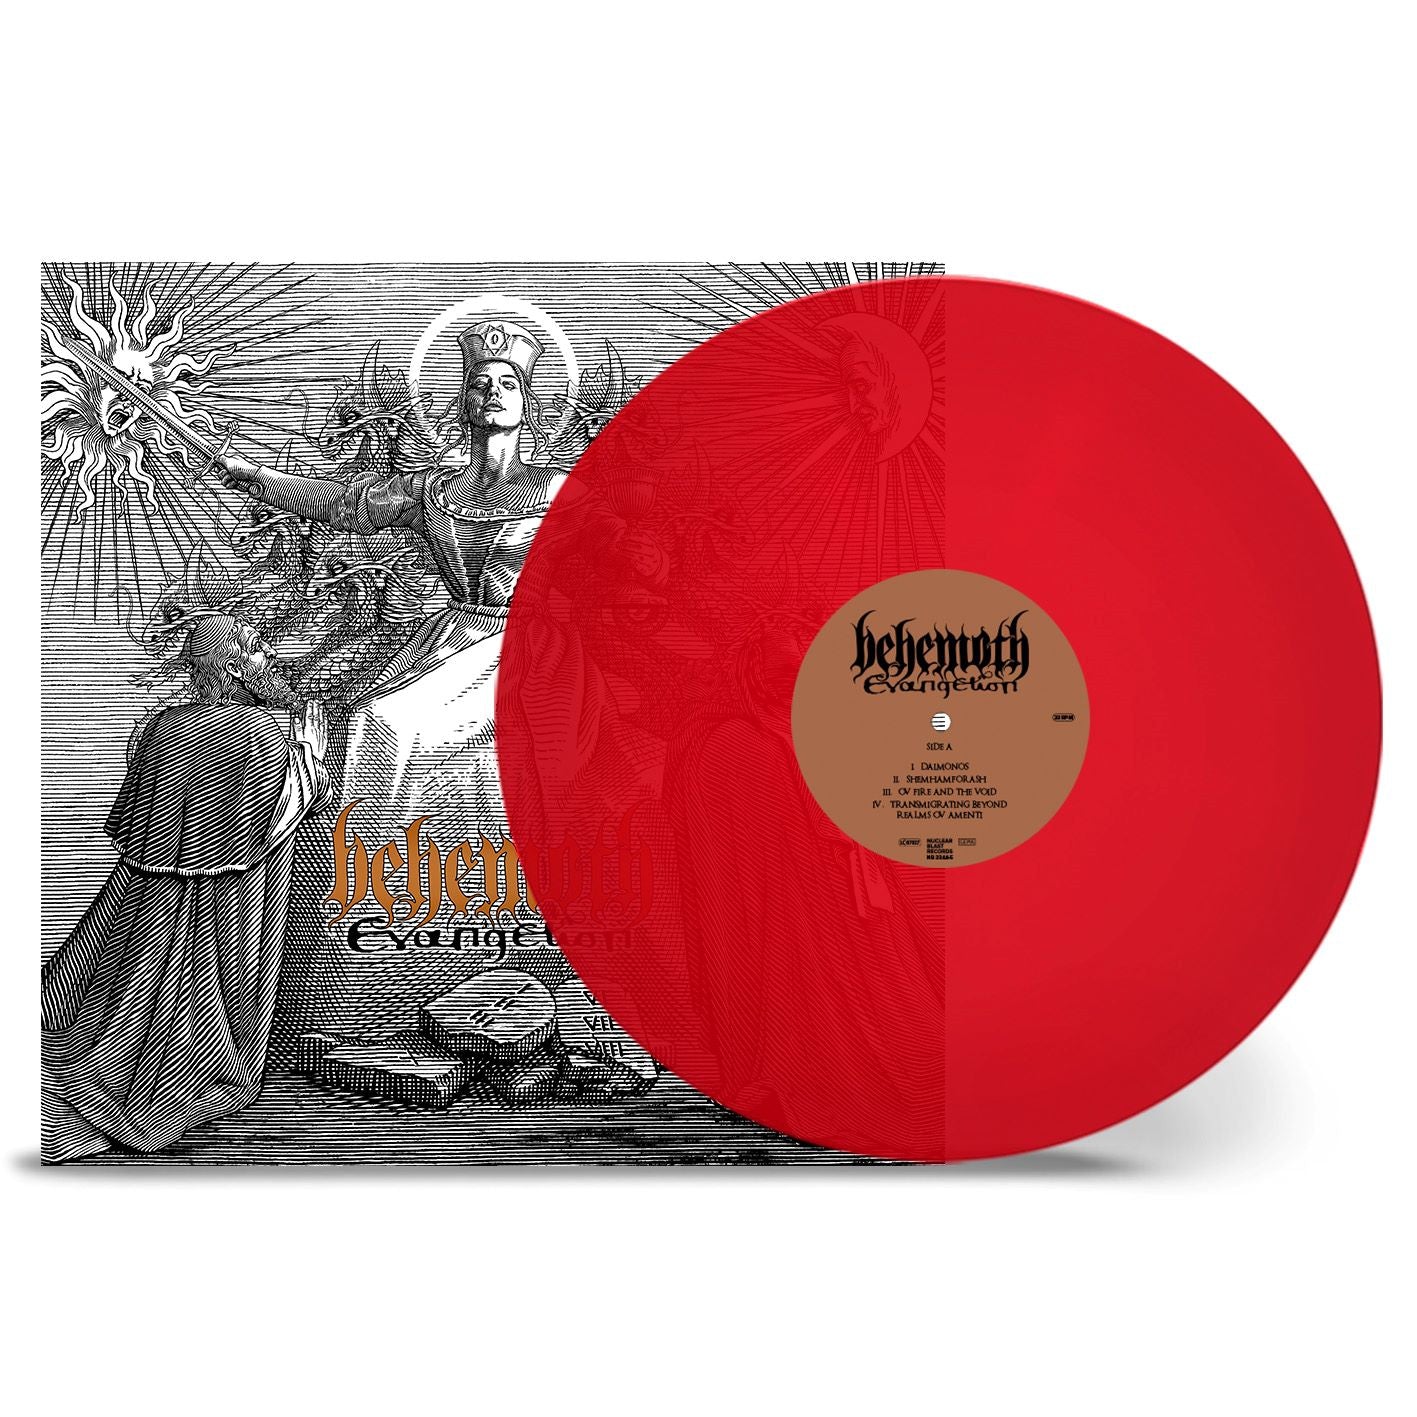 Behemoth "Evangelion" Red Vinyl - PRE-ORDER